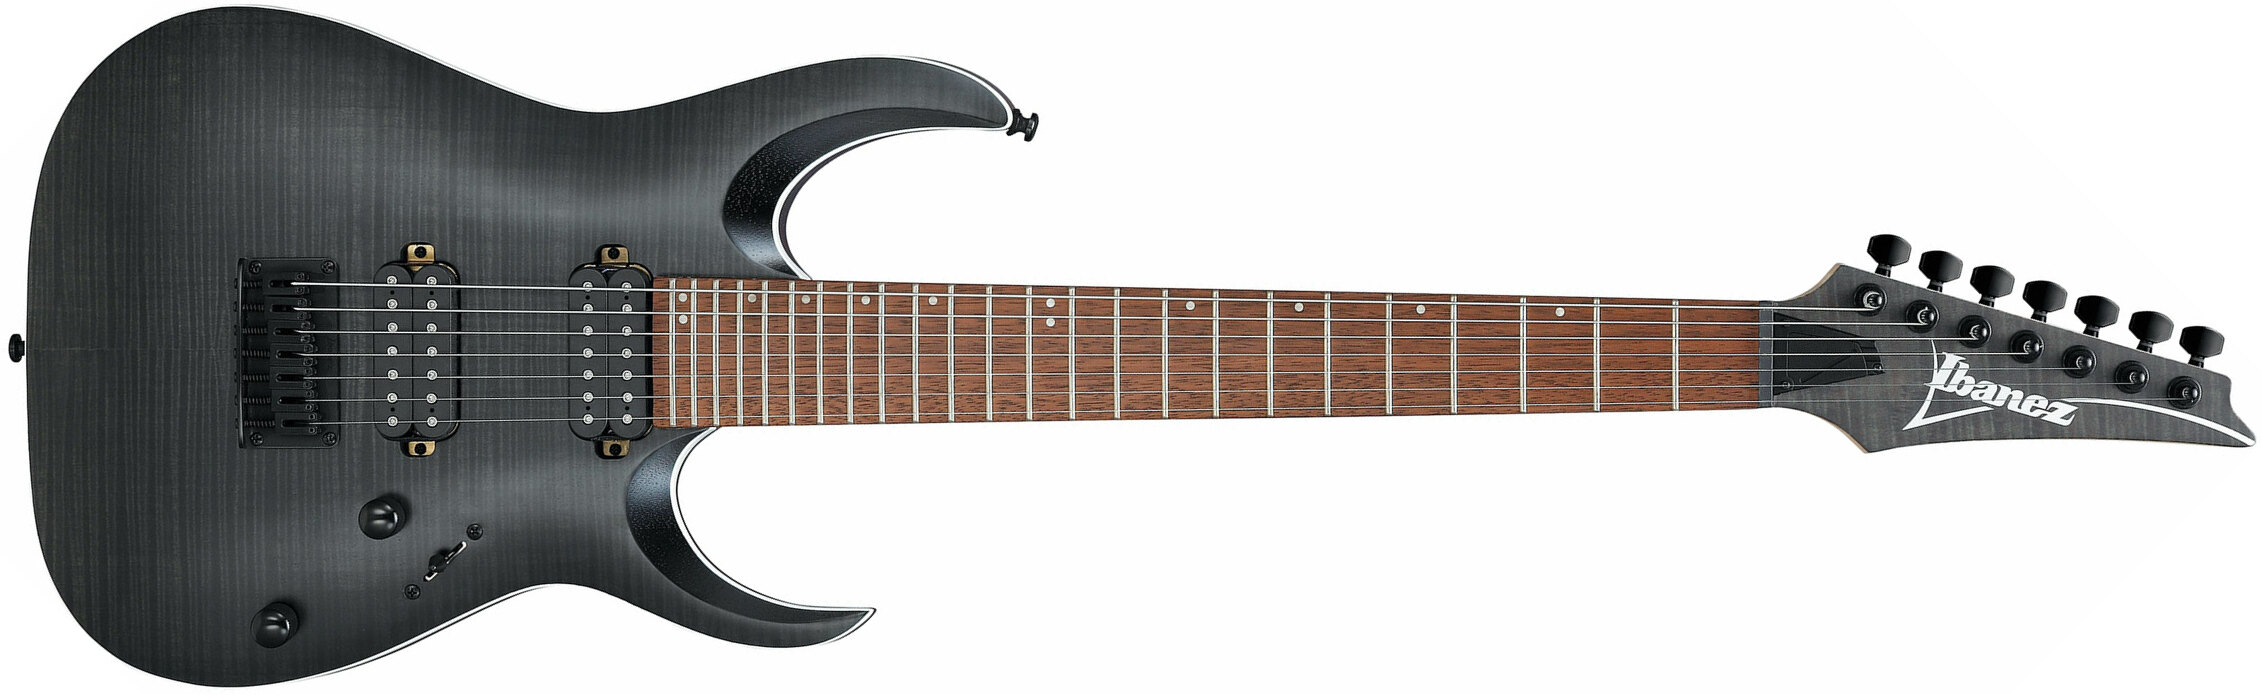 Ibanez Rga742fm Tgf Standard Hh Ht Jat - Transparent Gray Flat - 7 string electric guitar - Main picture